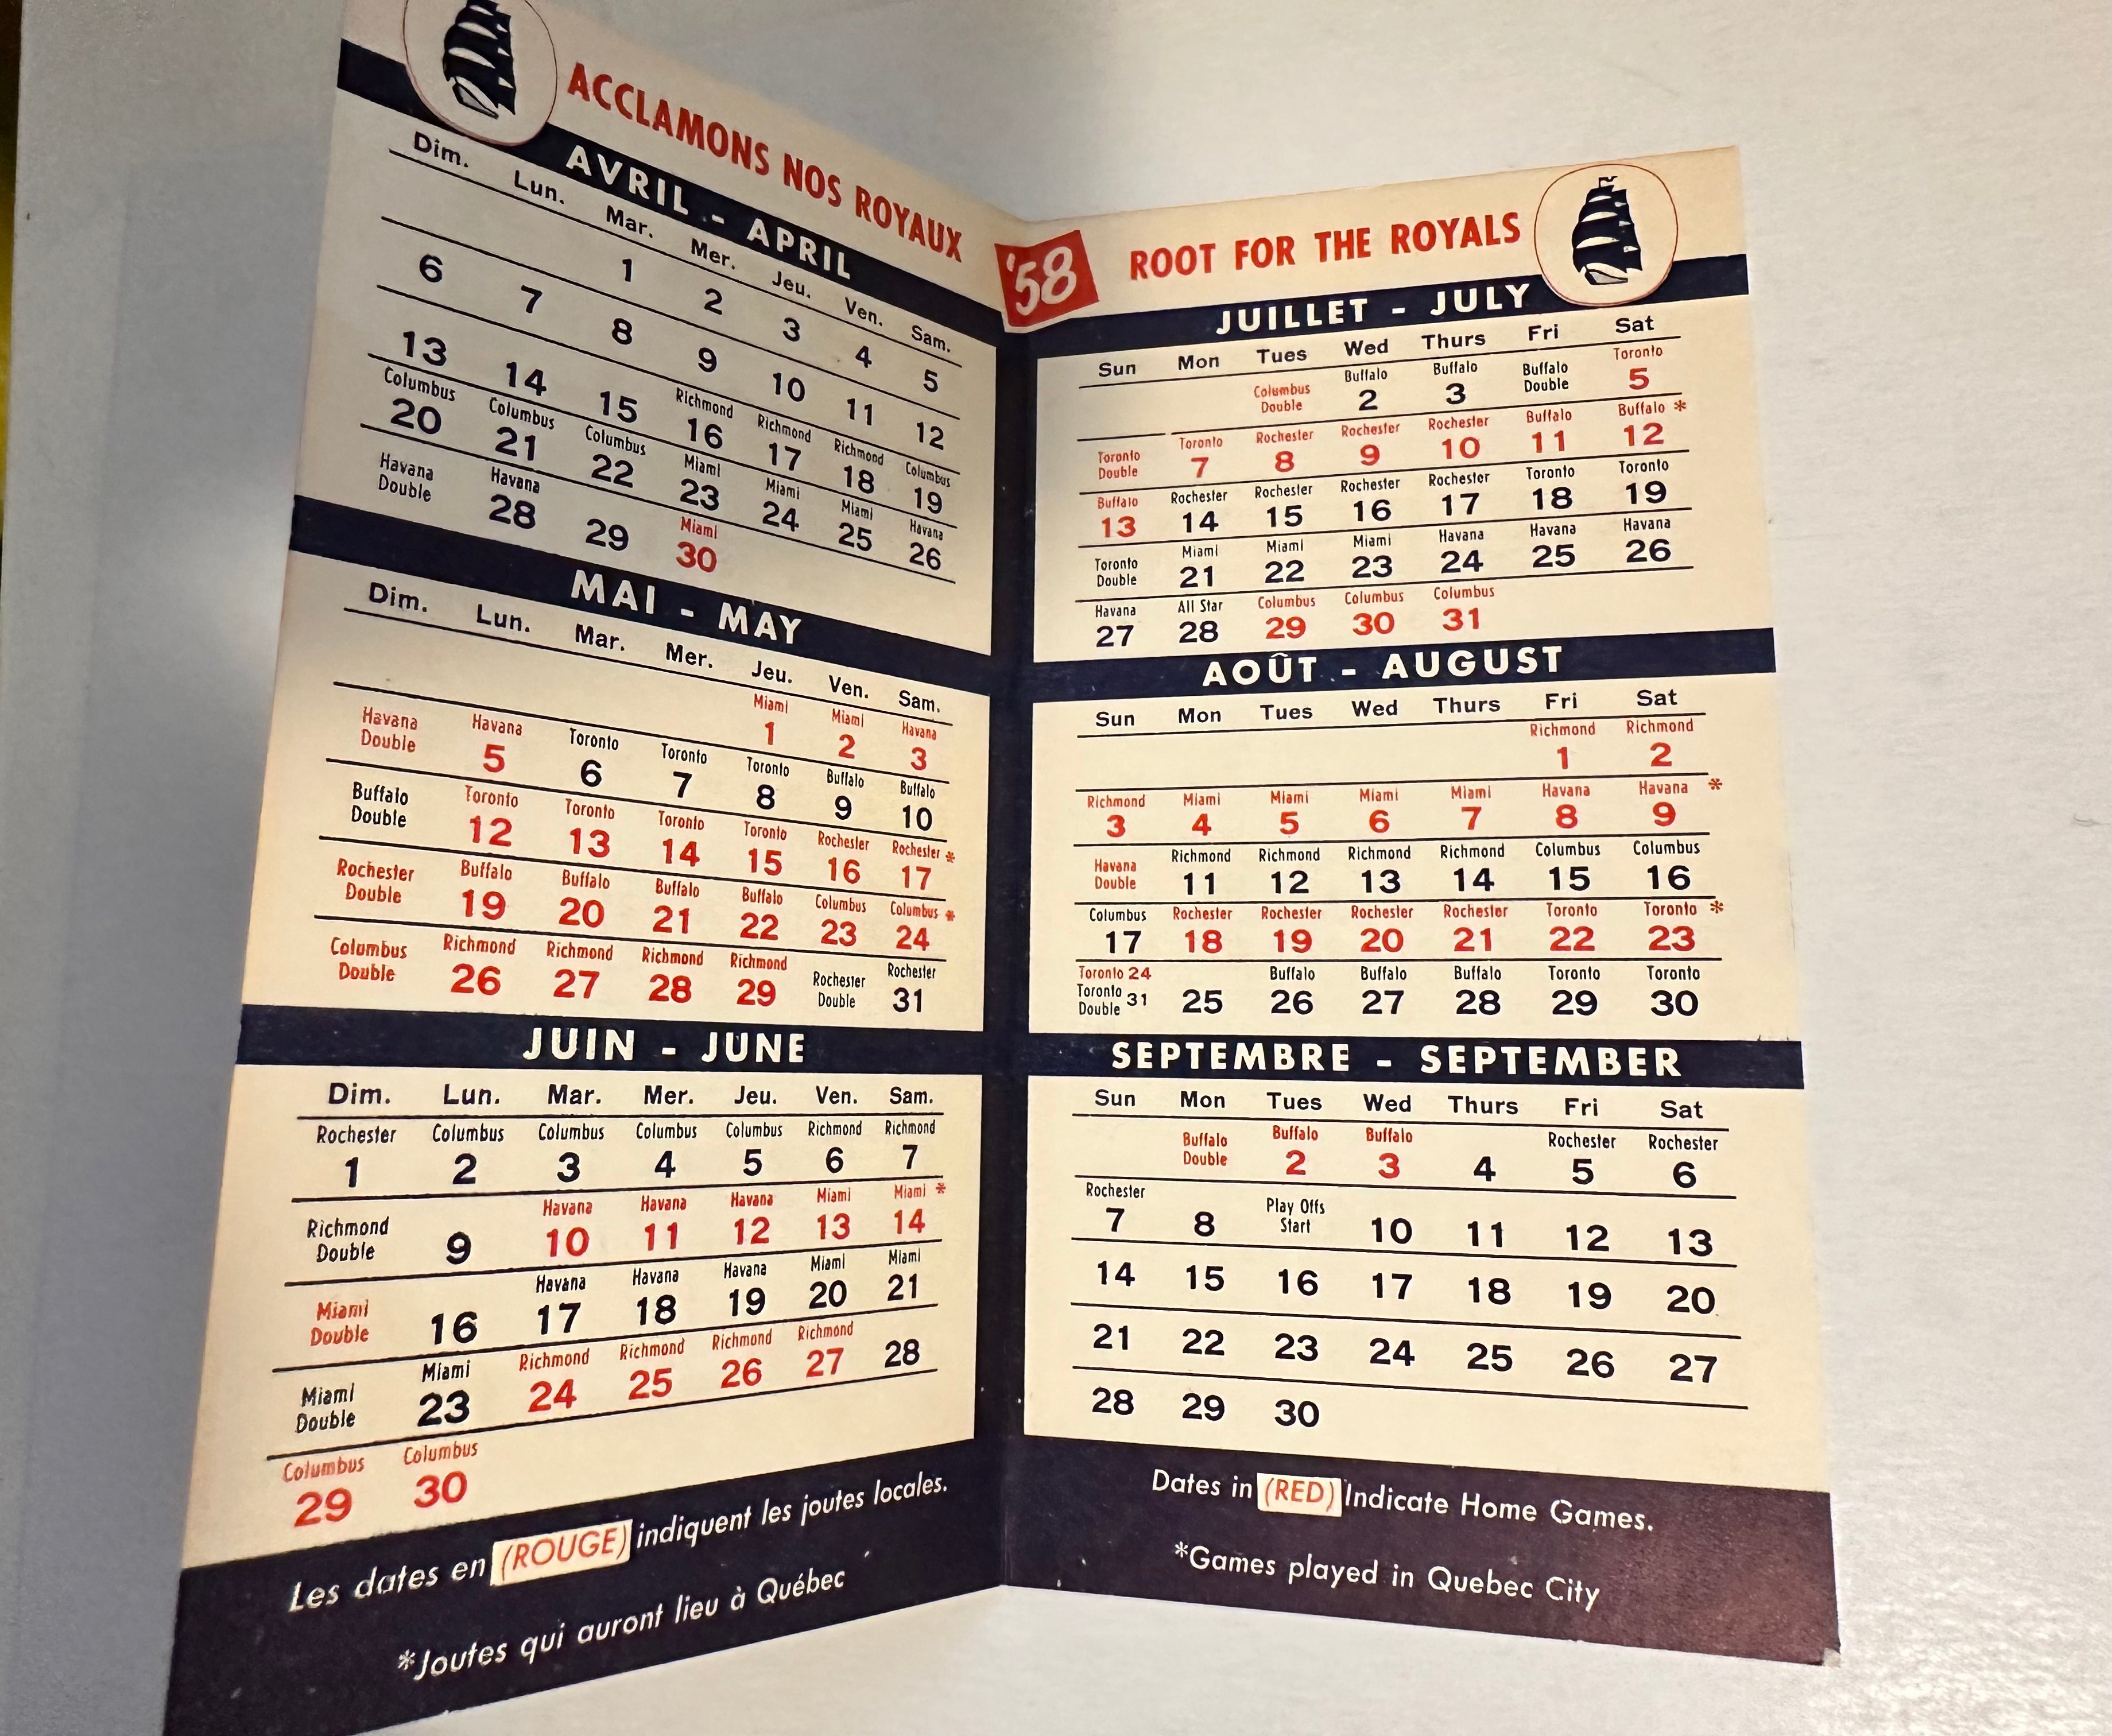 Montreal Royals baseball rare schedule 1958